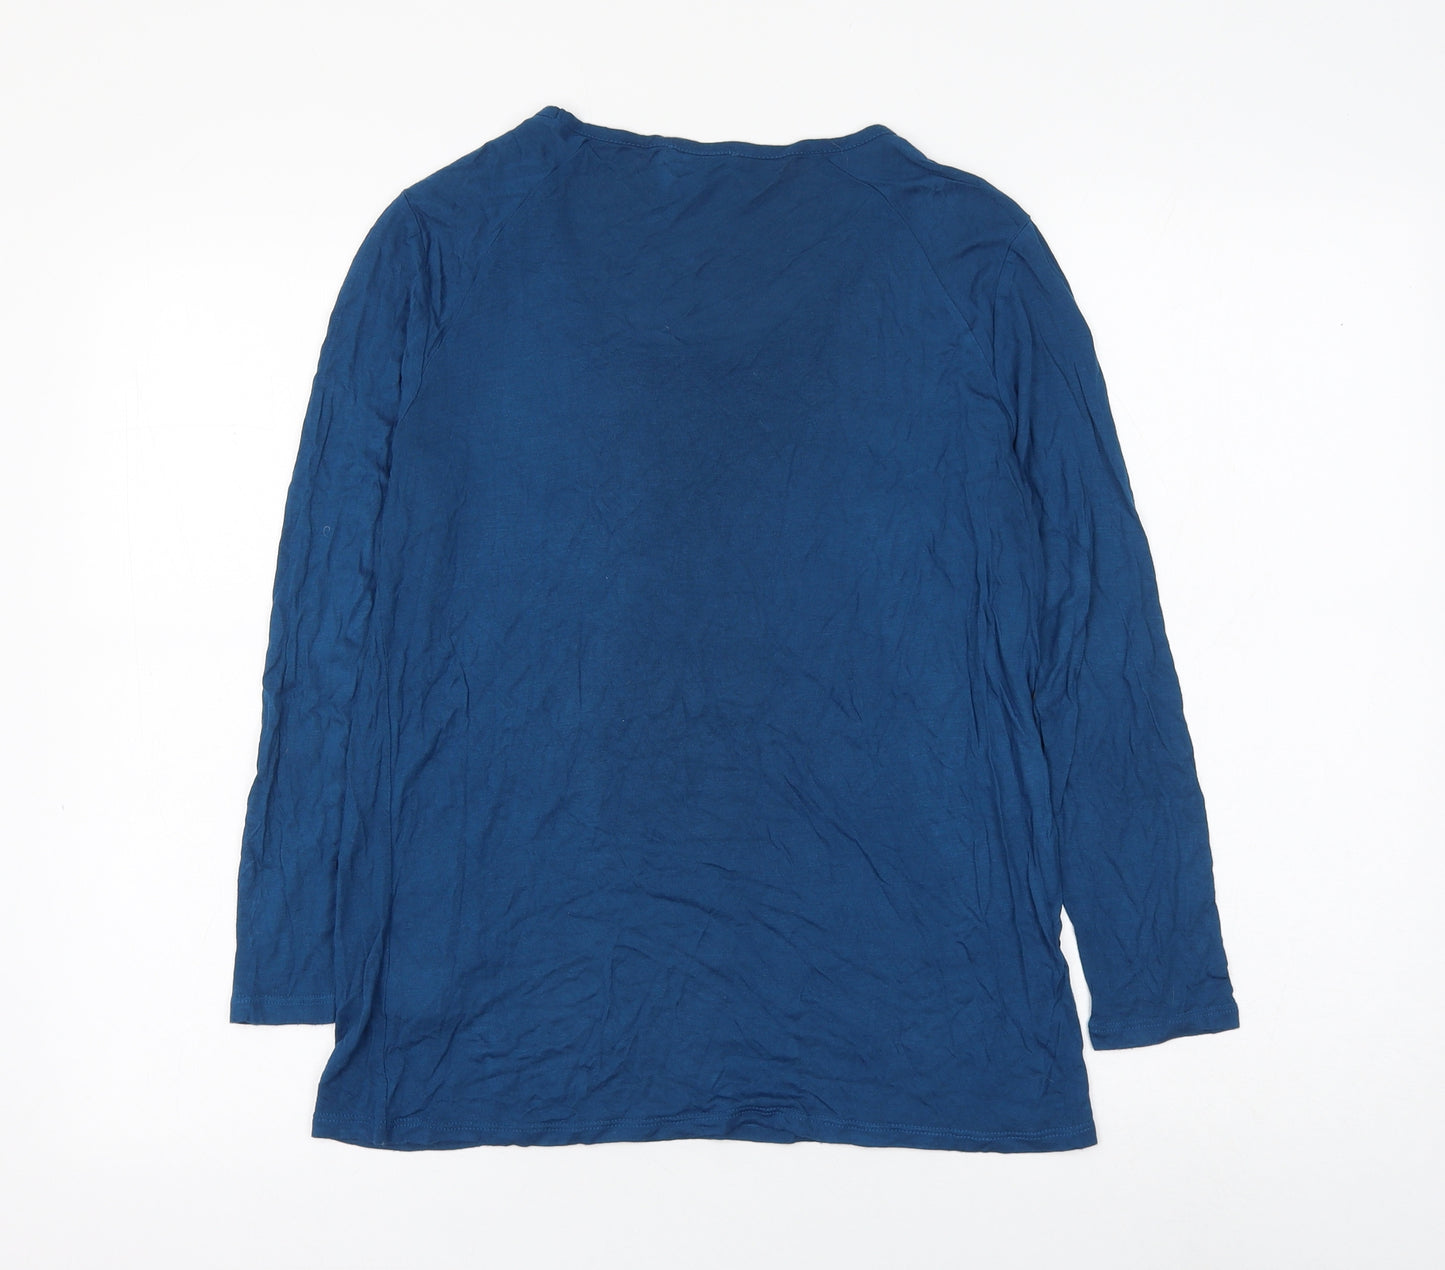 Reiss Womens Blue Polka Dot Viscose Basic T-Shirt Size S Scoop Neck